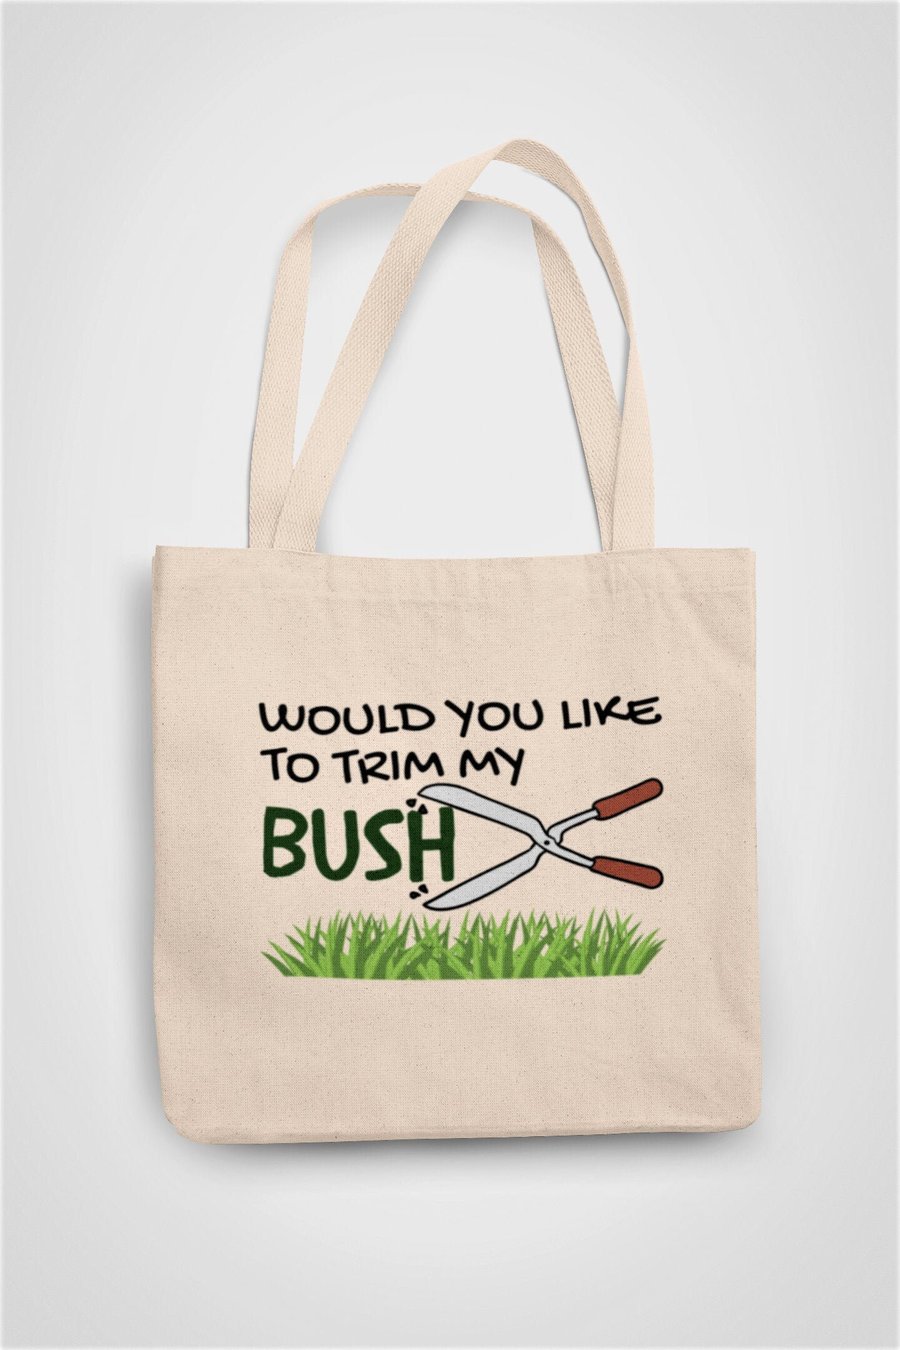 Would you like to Trim my Bush Outdoor Garden Tote Bag Reusable Cotton bag 